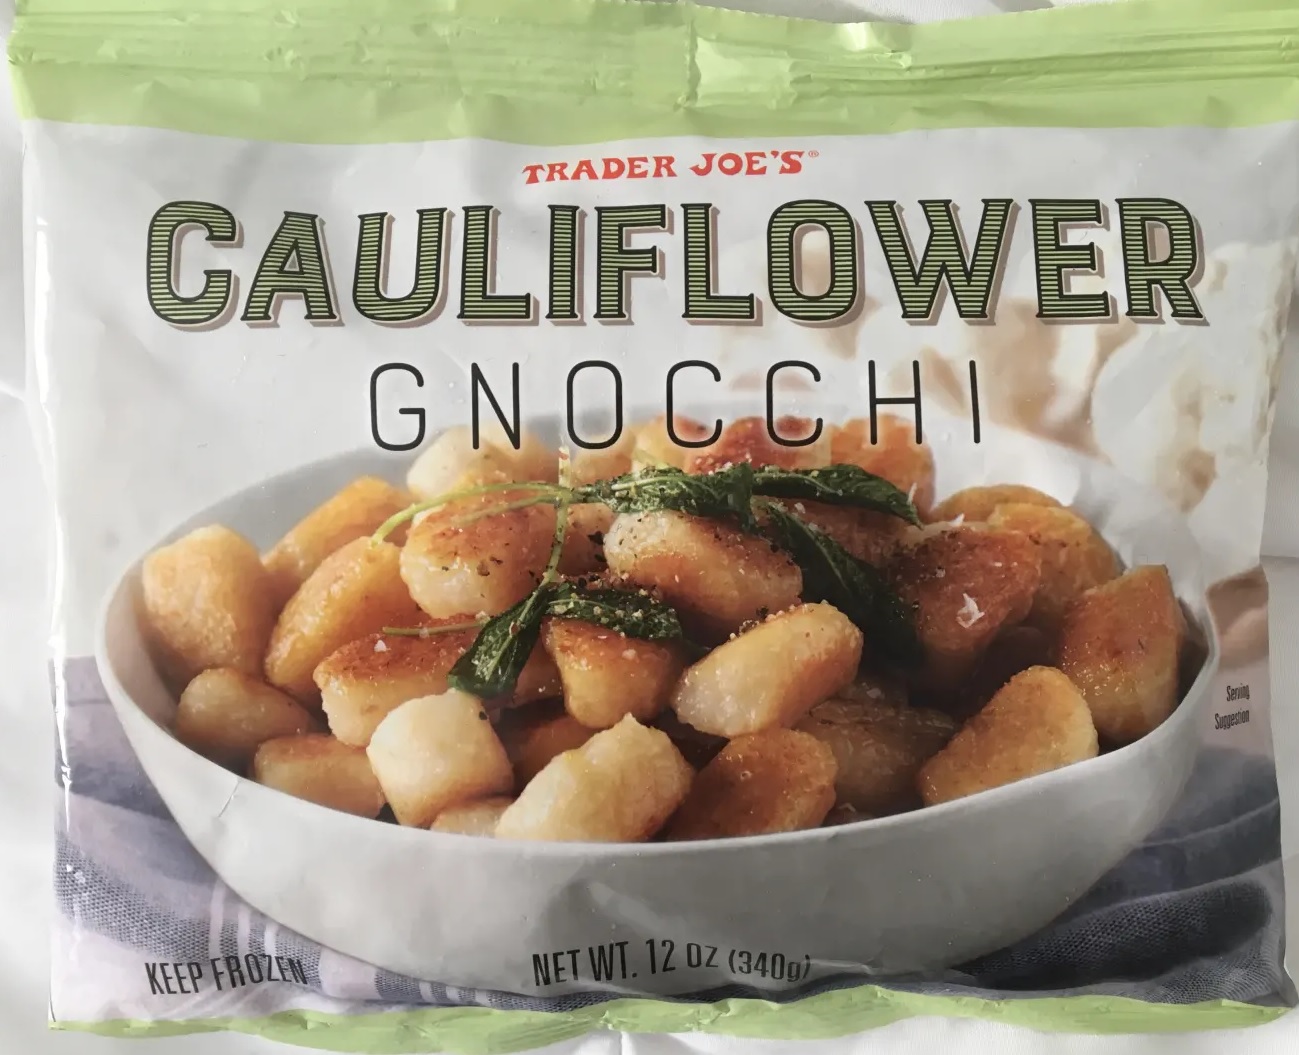 CauliflowerGnocchi